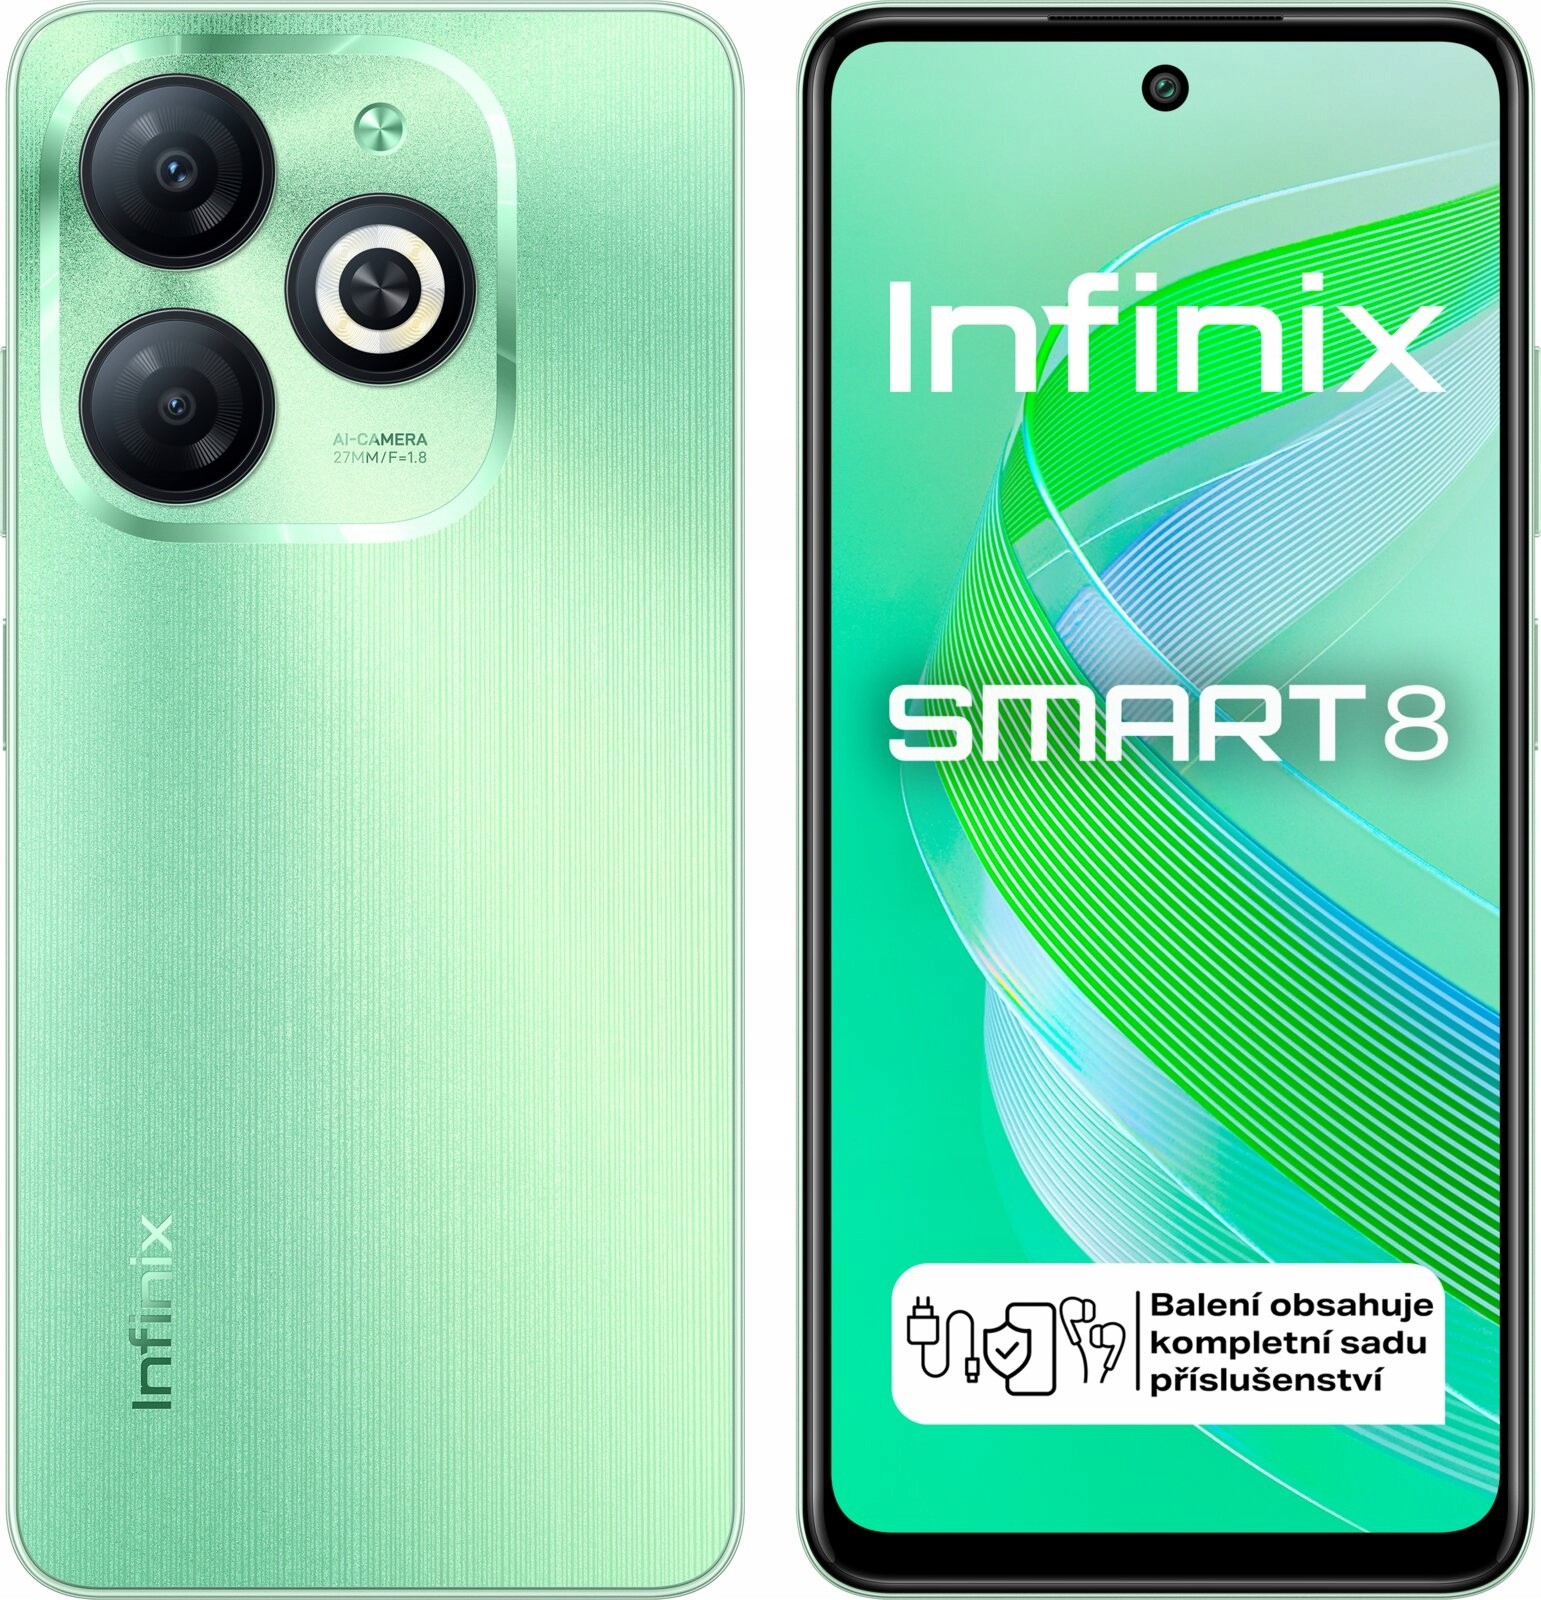 Smartphone Infinix Smart 8 3 Gb 64 Gb 4G (lte) zelený